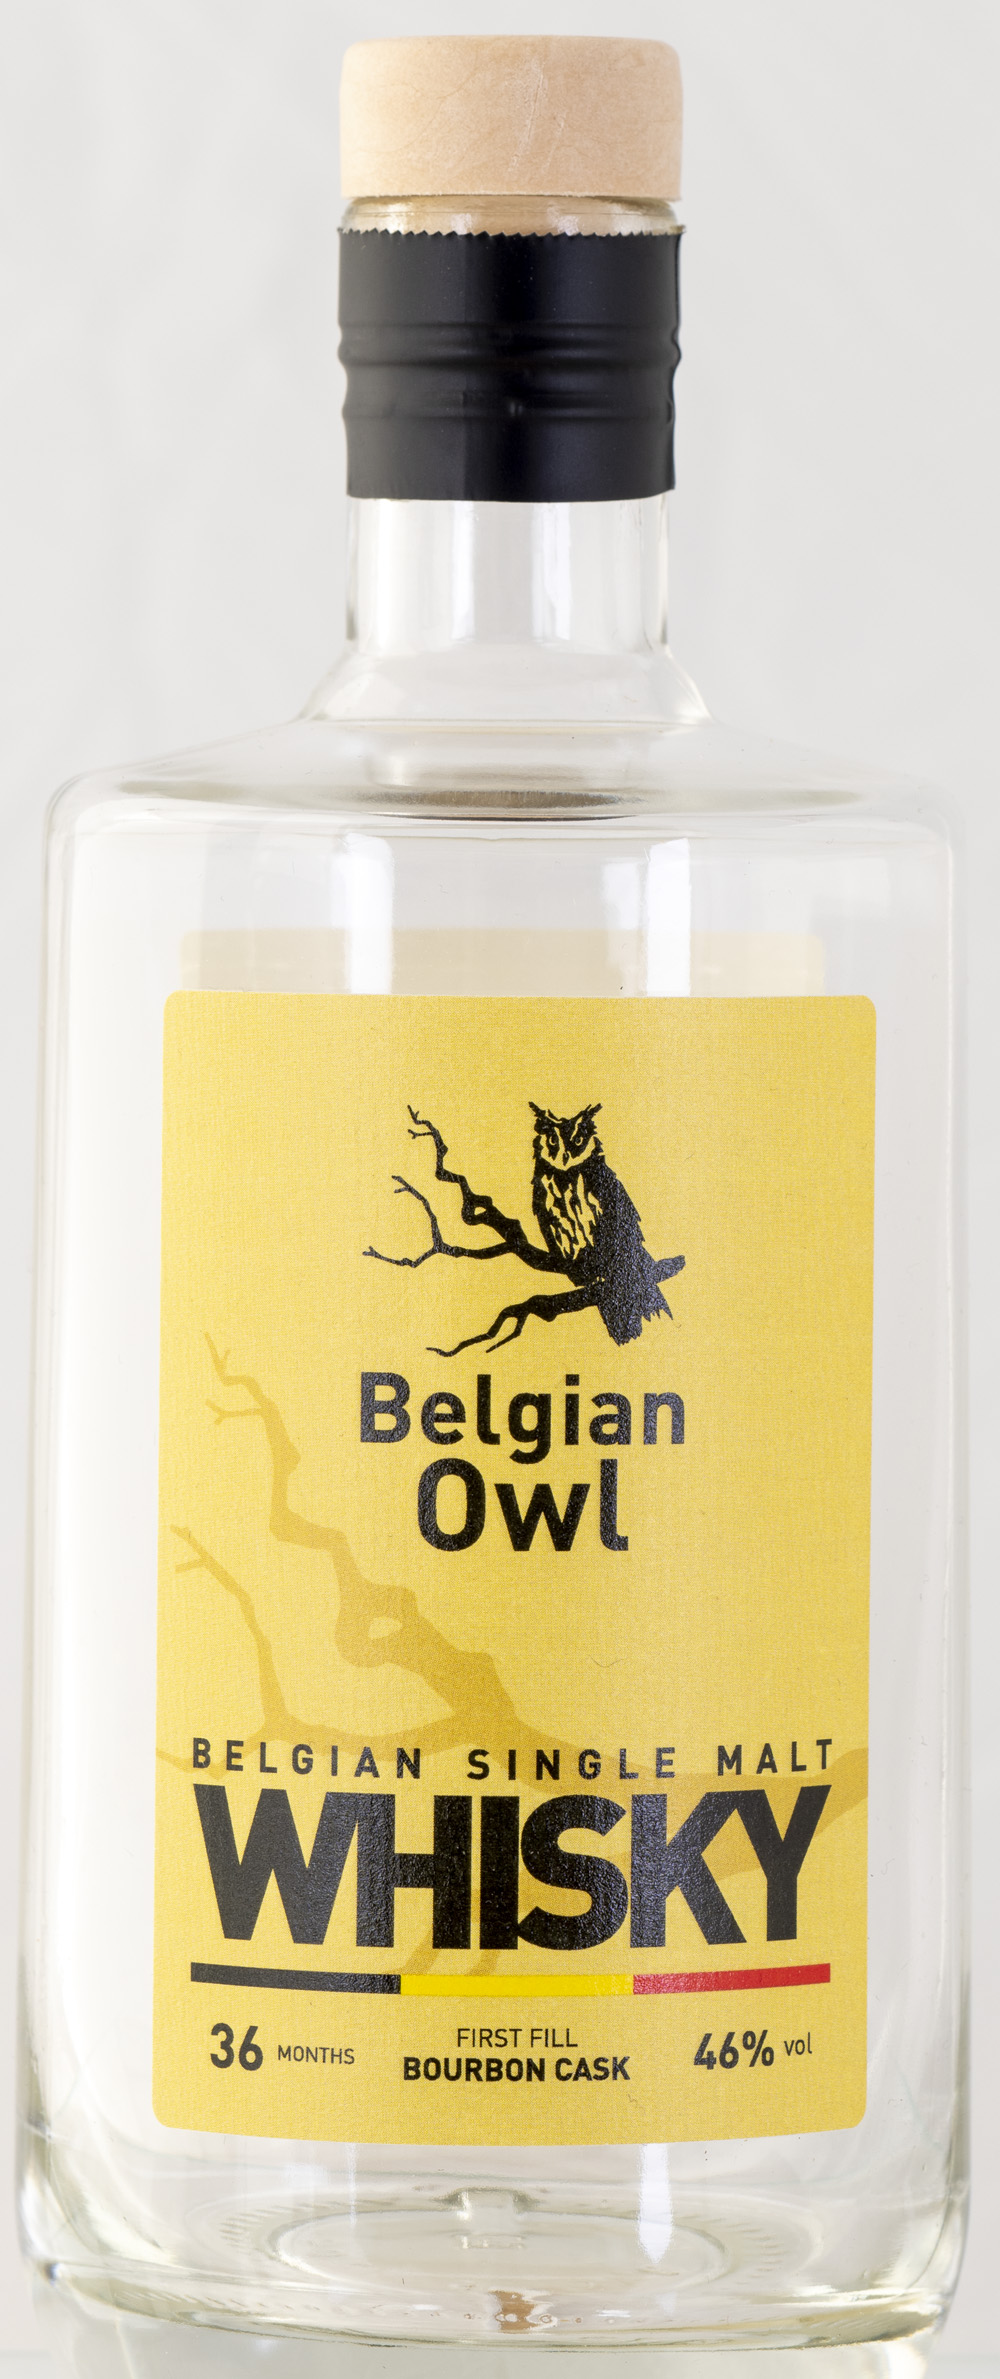 Billede: PHC_2234 - Belgian Owl - bottle front.jpg